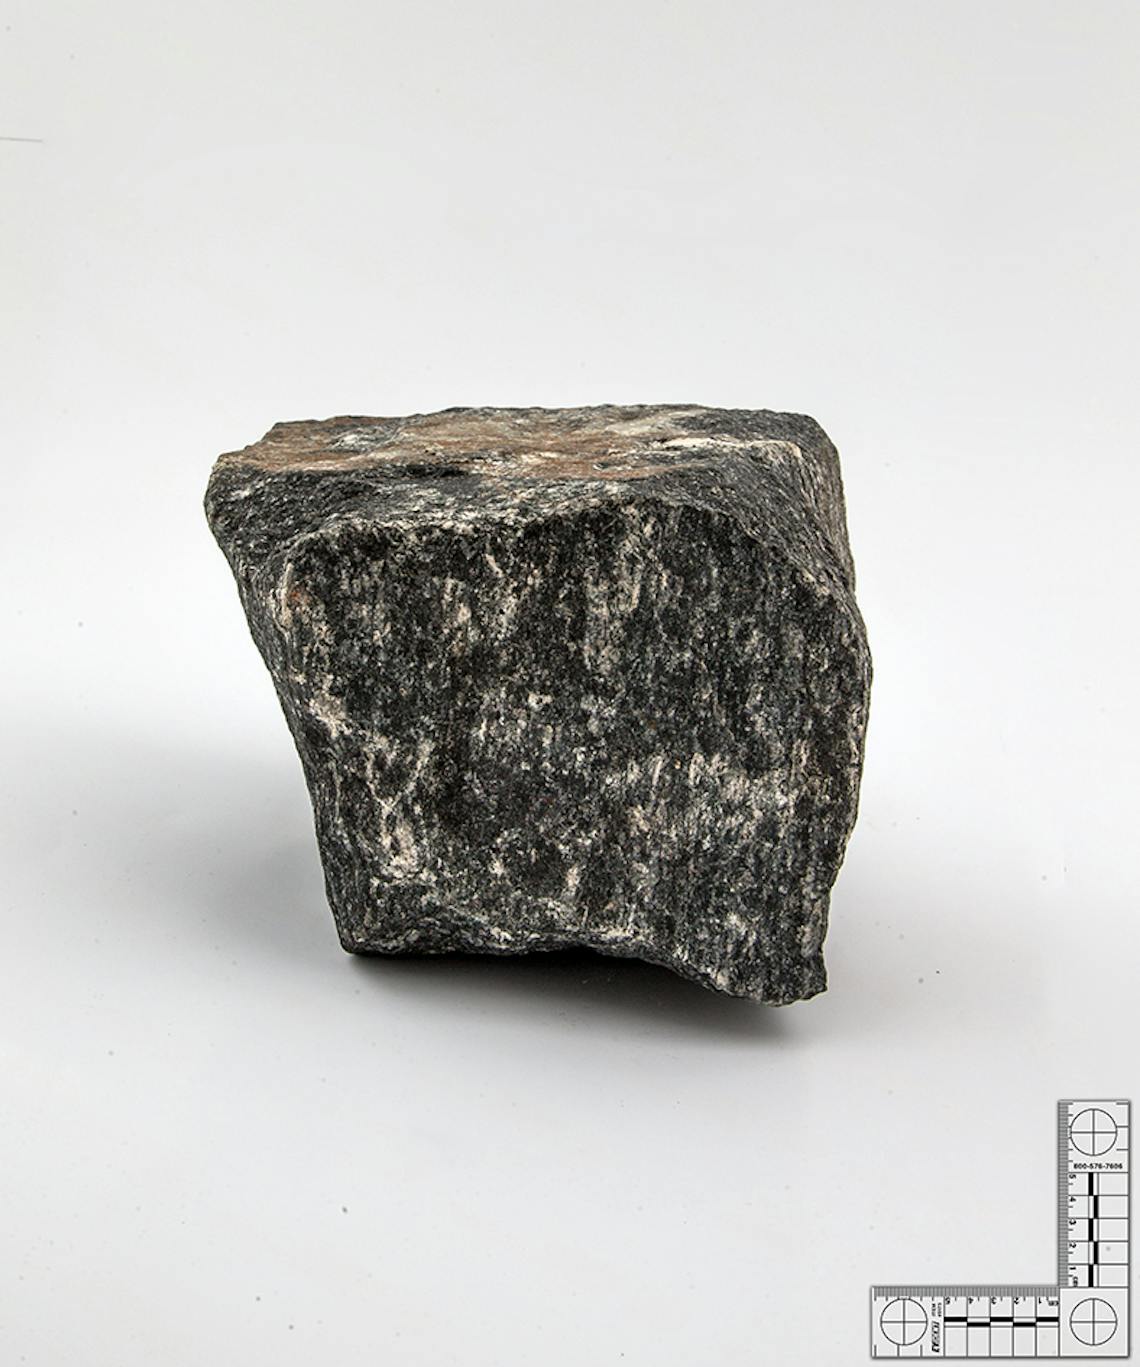 1. The Black Stone